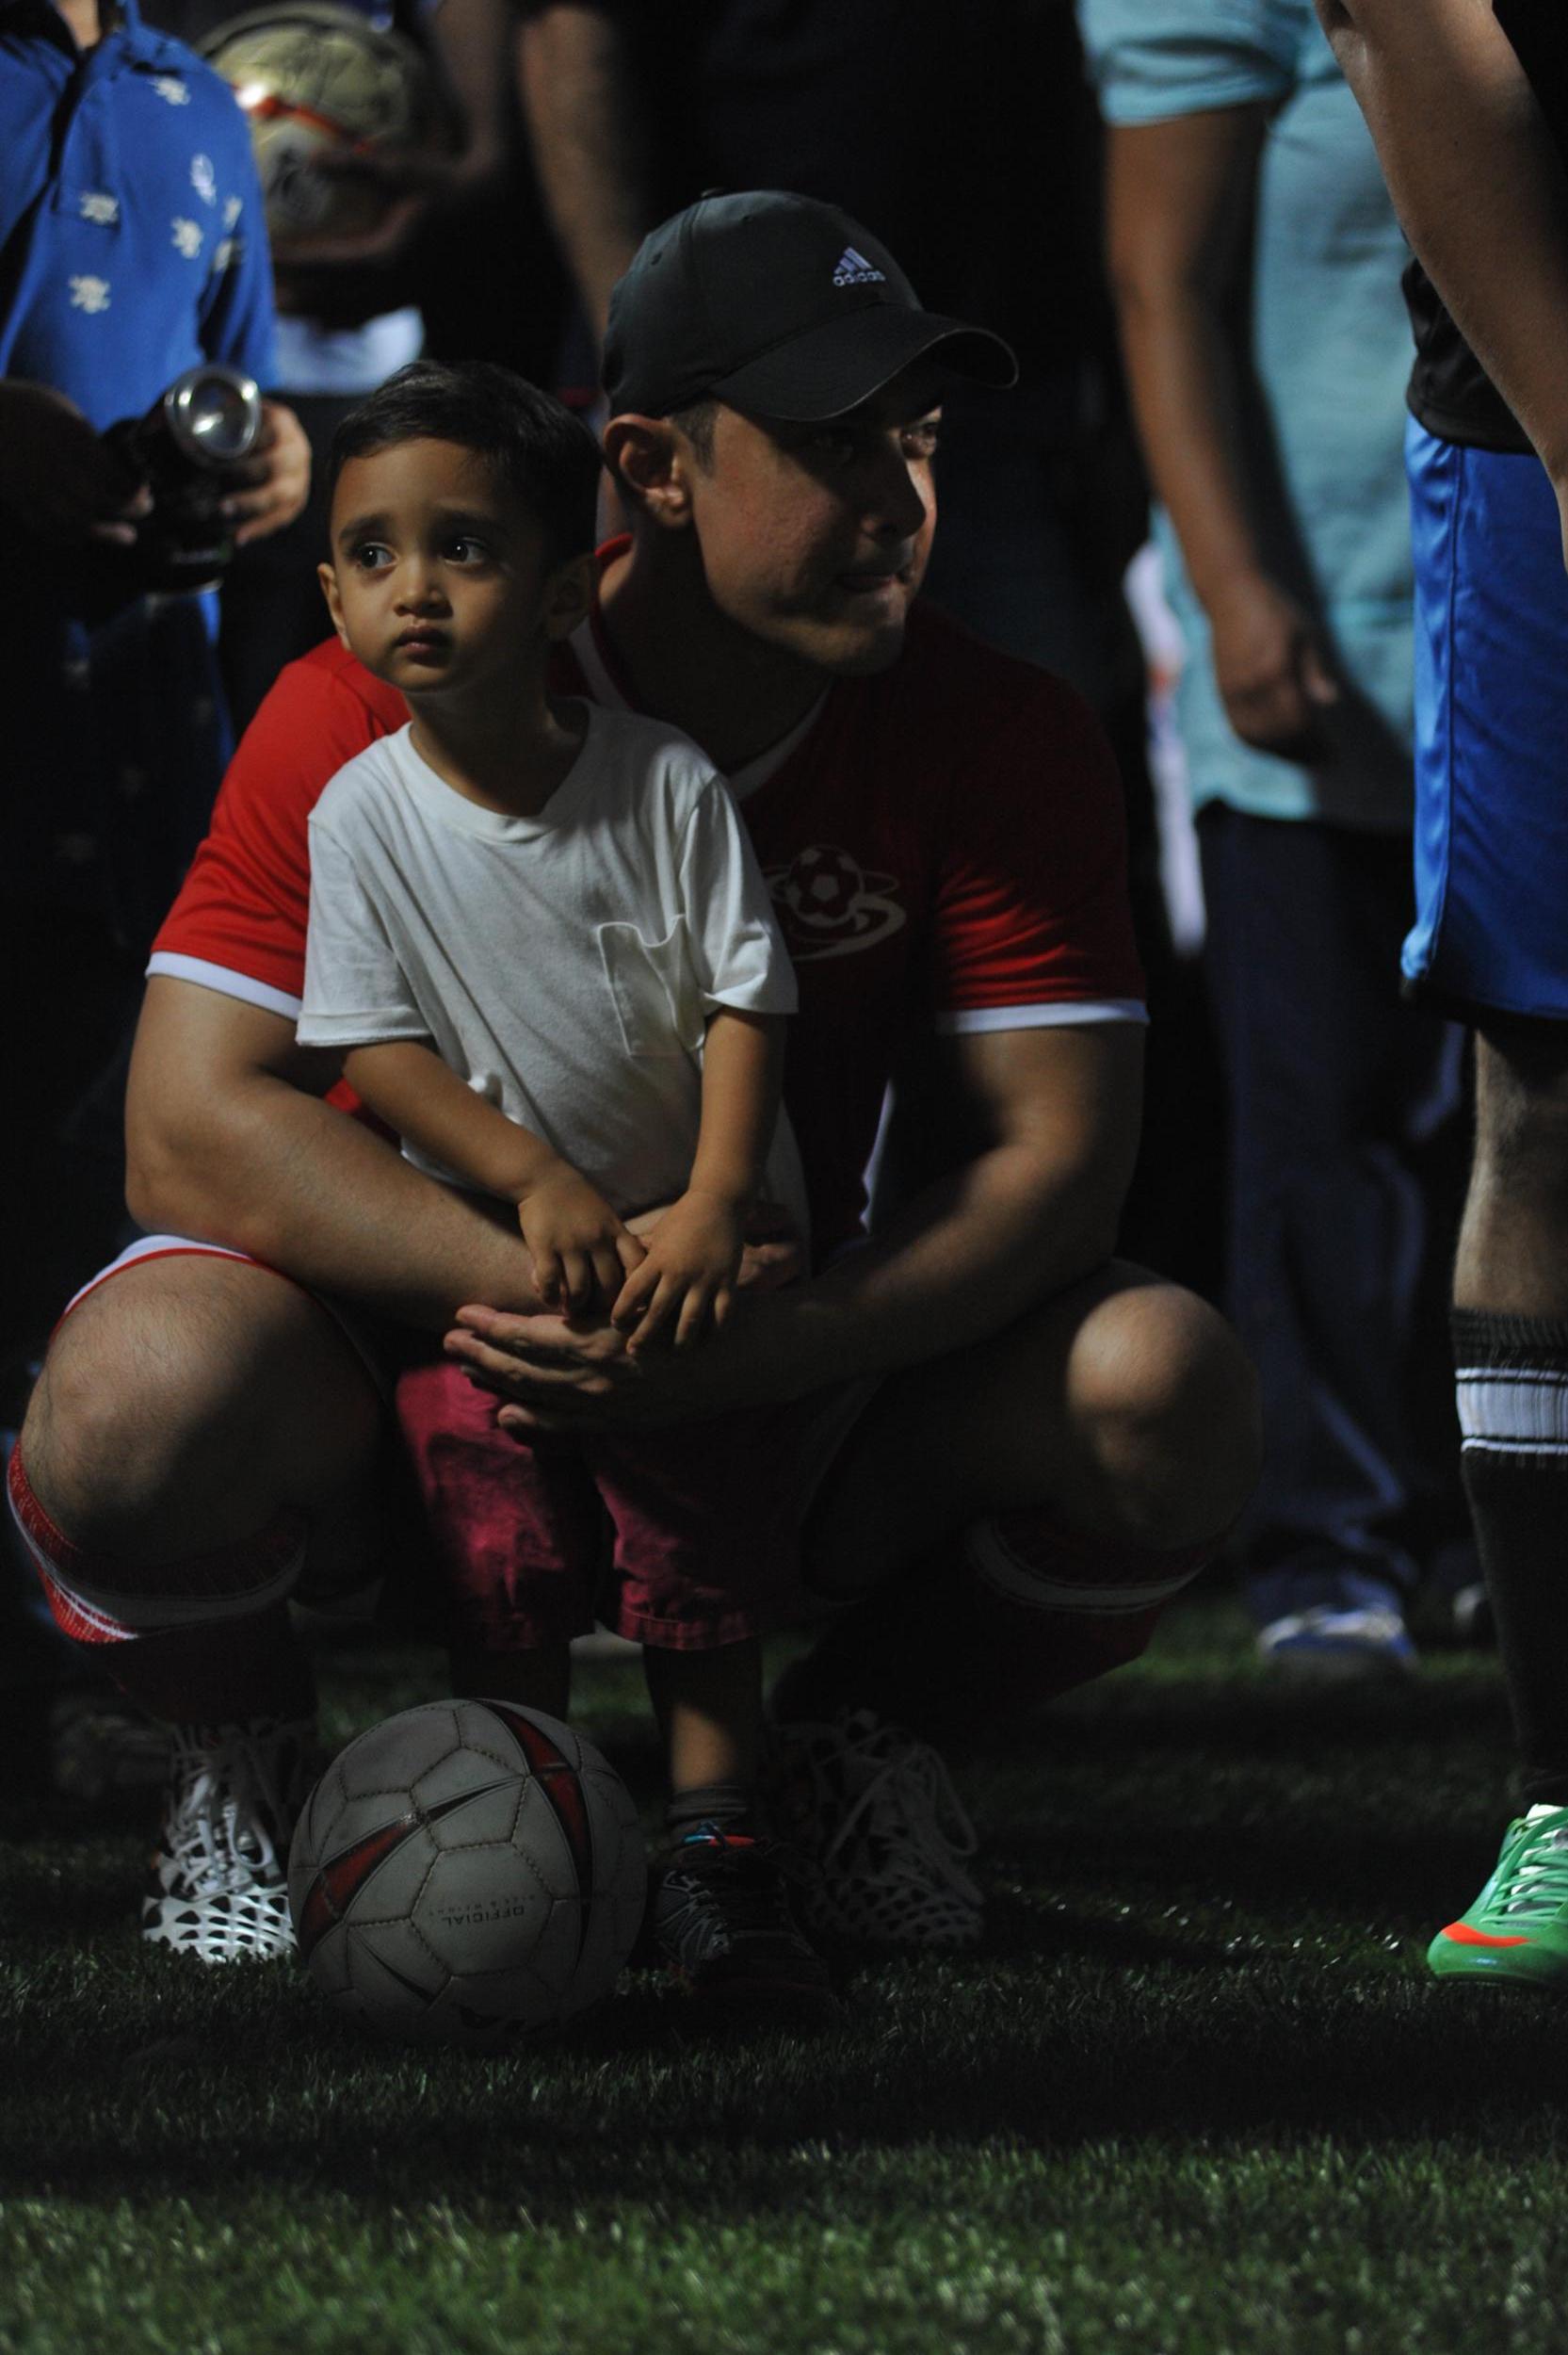 Aamir-Khan-Son-Soccer